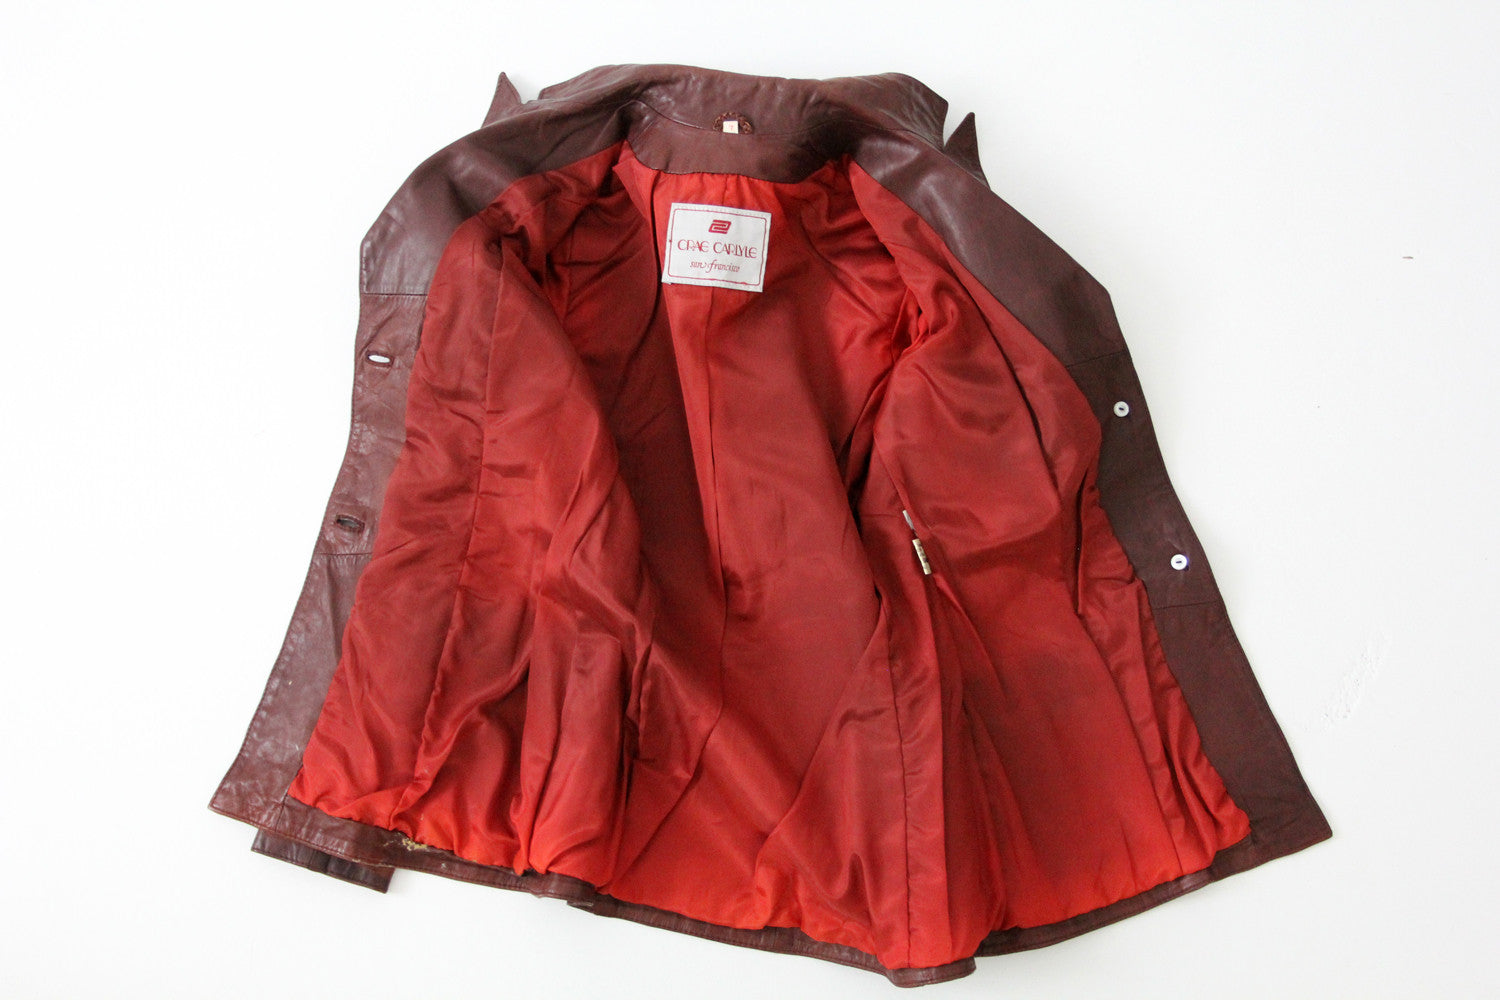 vintage Crae Carlyle leather jacket